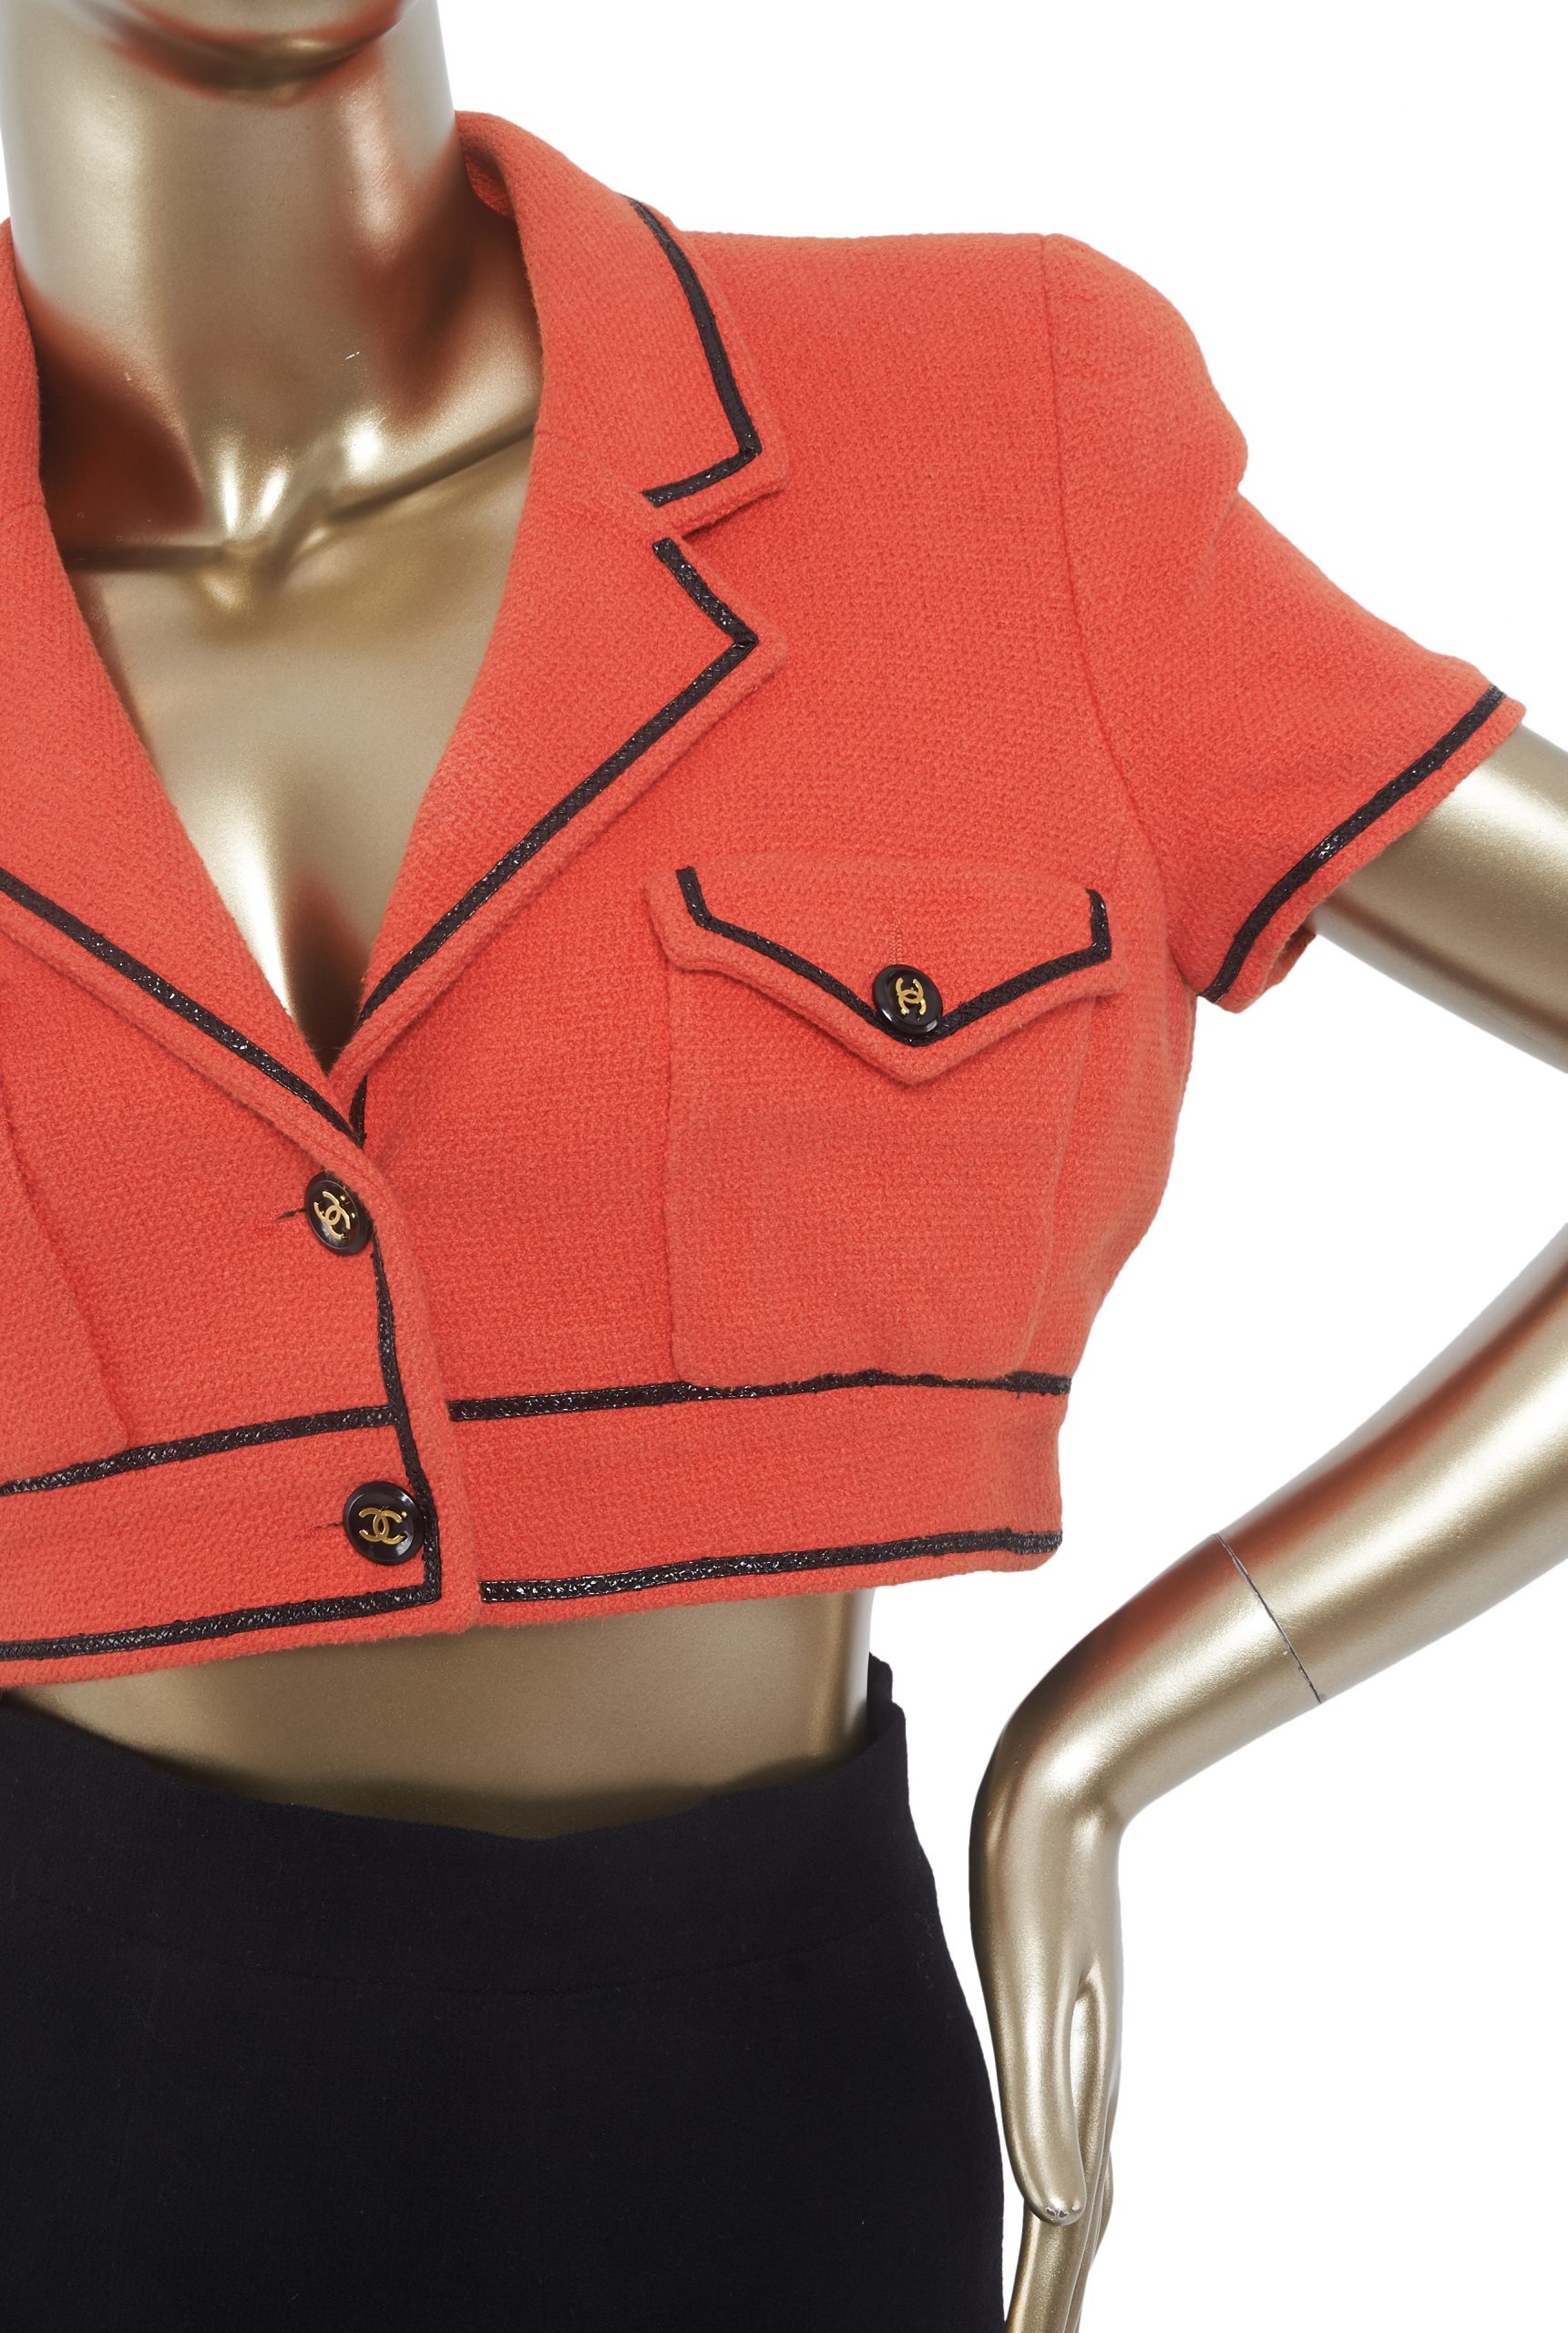 Sold at Auction CHANEL Lace Trim Pink Tweed Jacket Skirt Suit Set CC  Buttons  38 US 6 Vintage